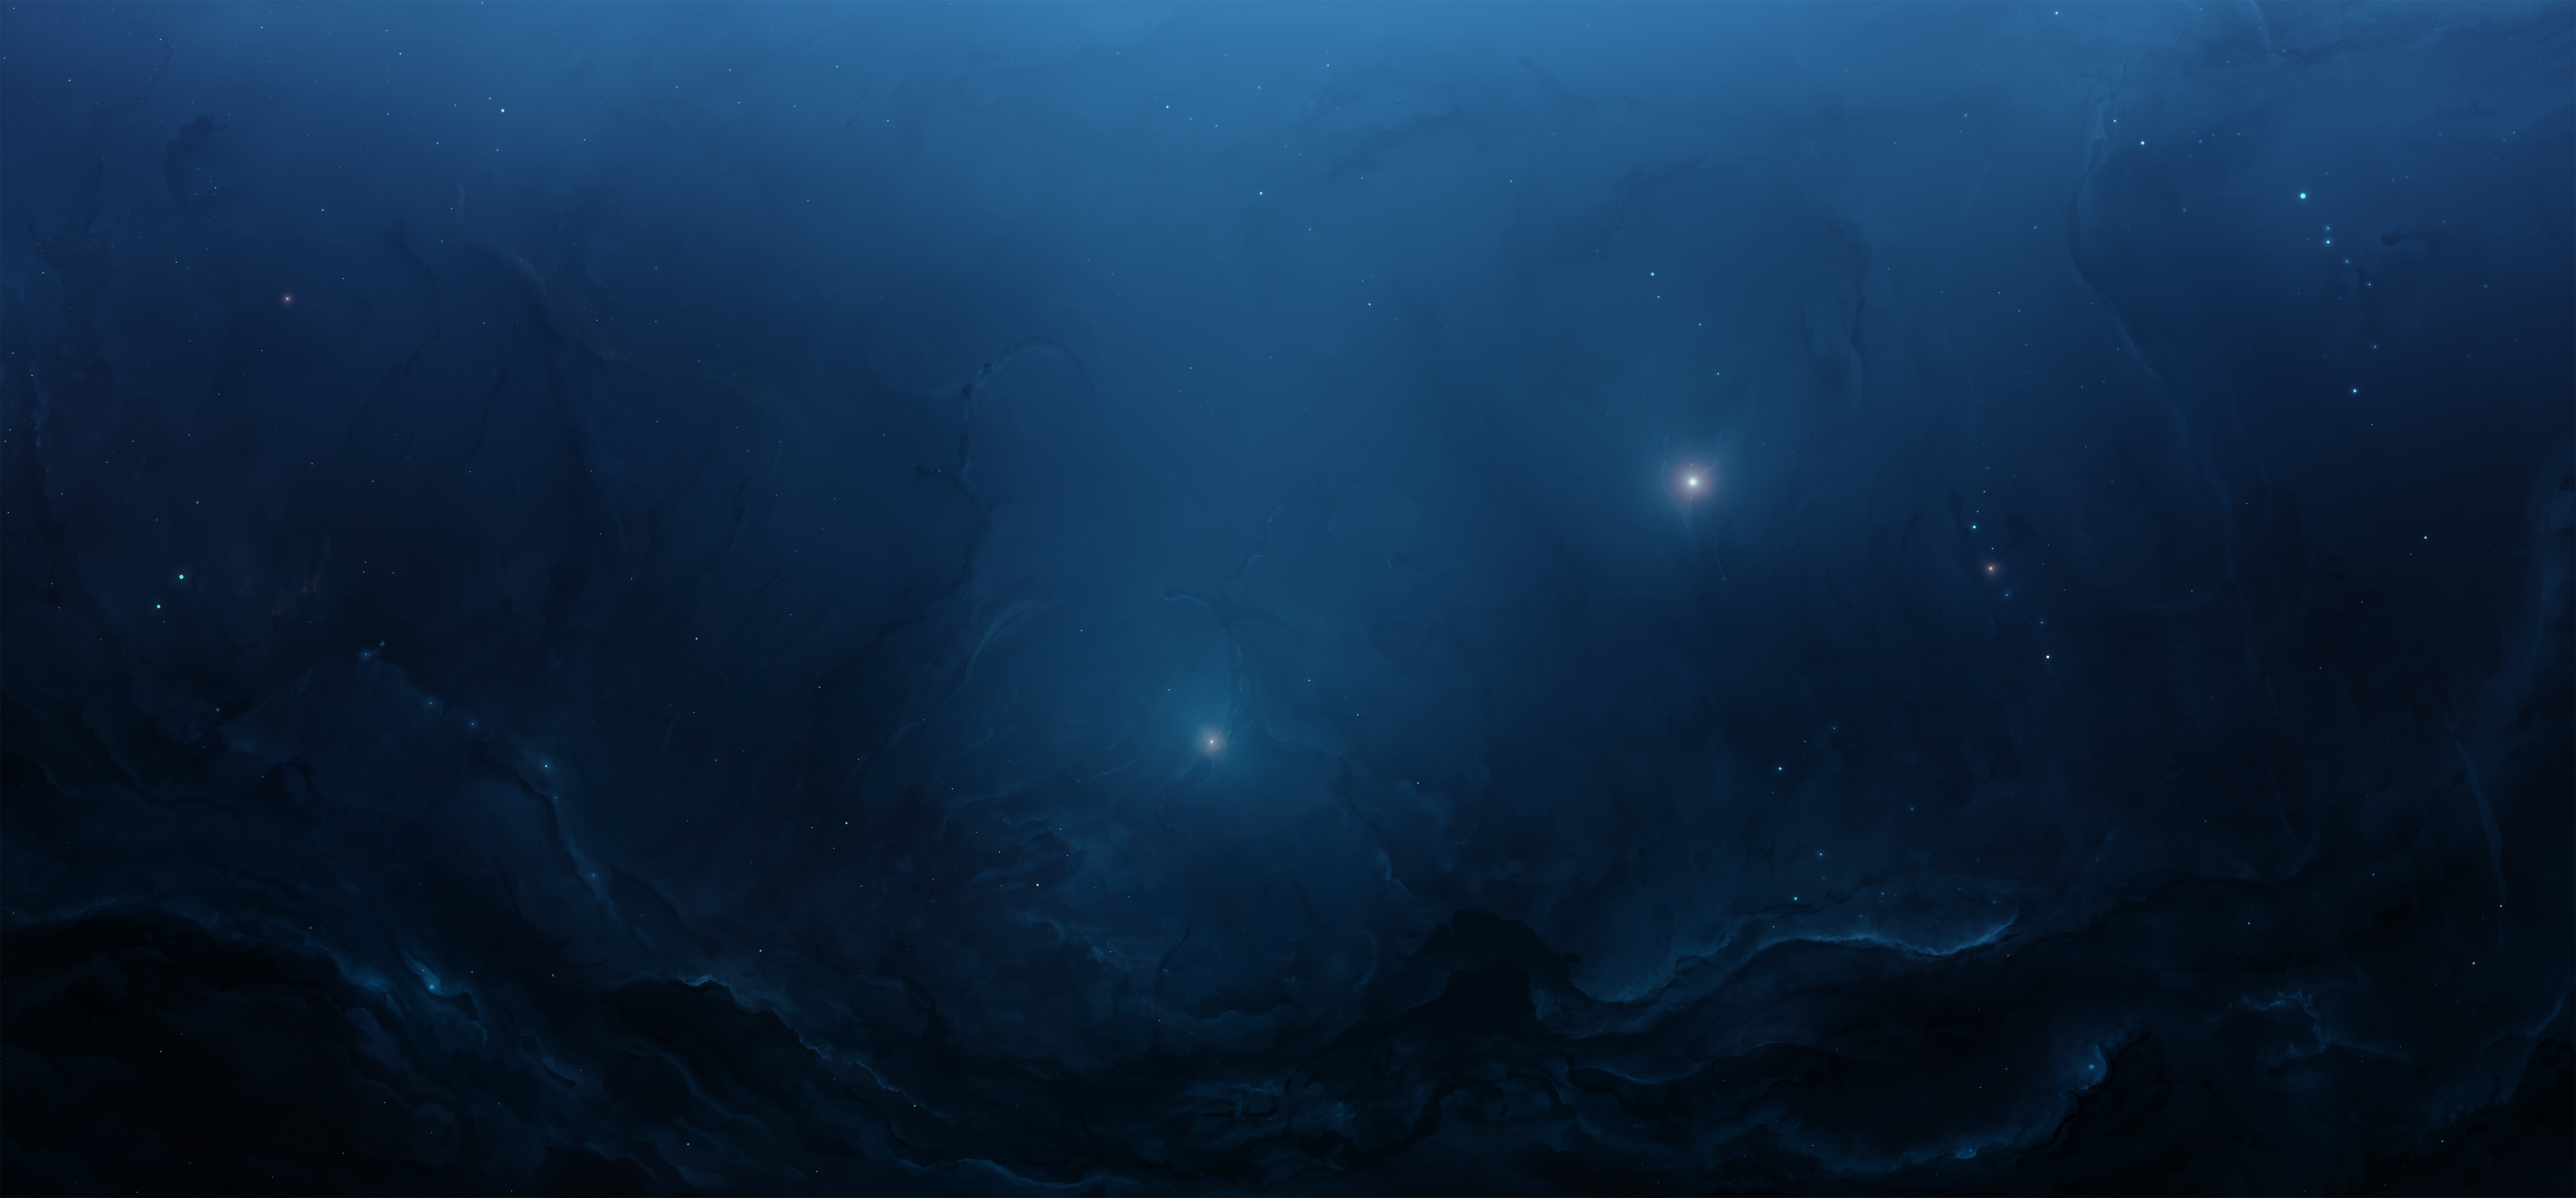 Forest Grove Nebula by Starkiteckt